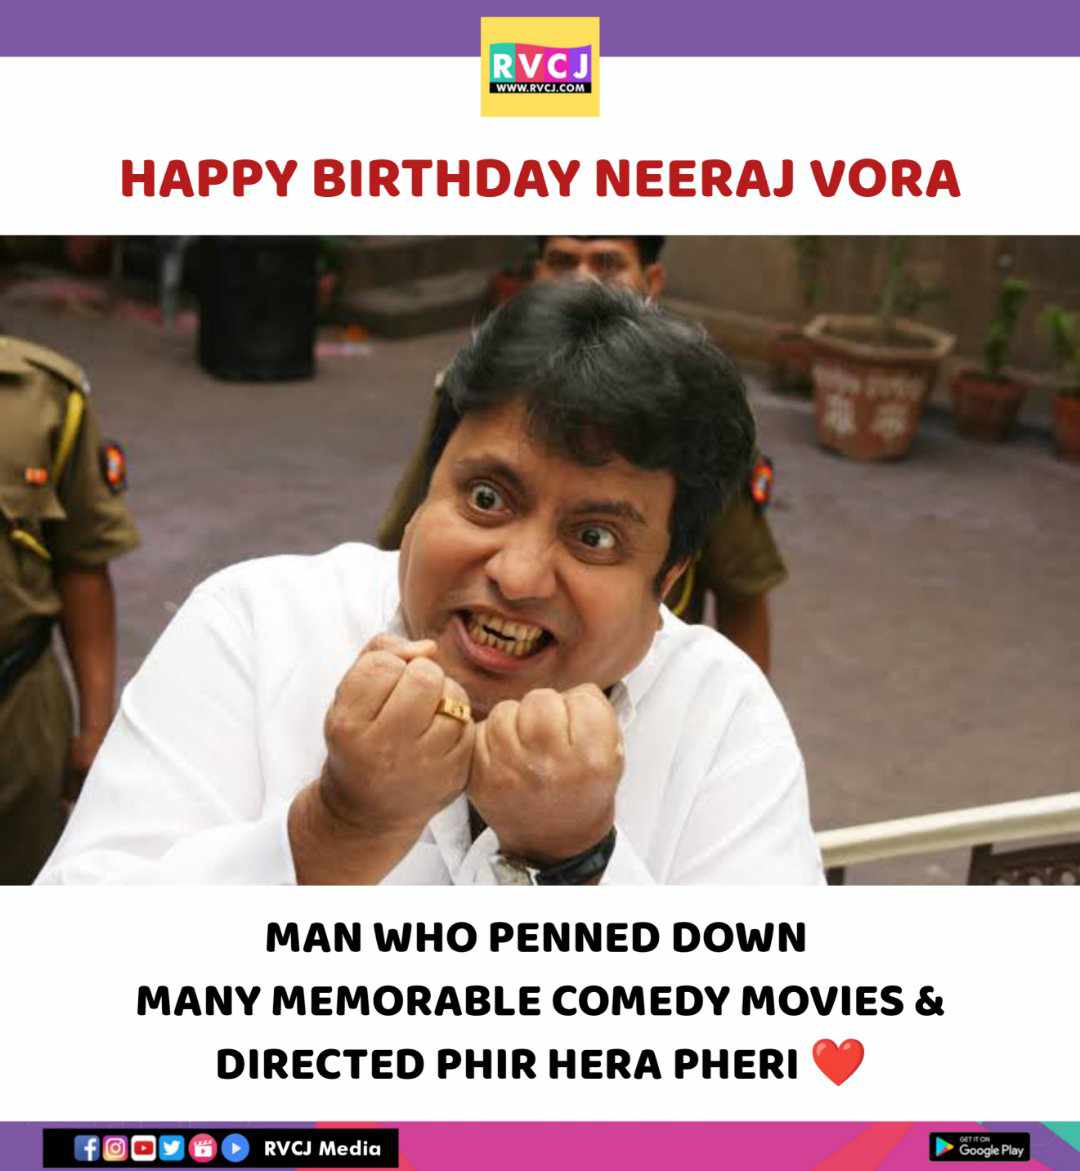 Happy Birthday Neeraj Vora

#neerajvora